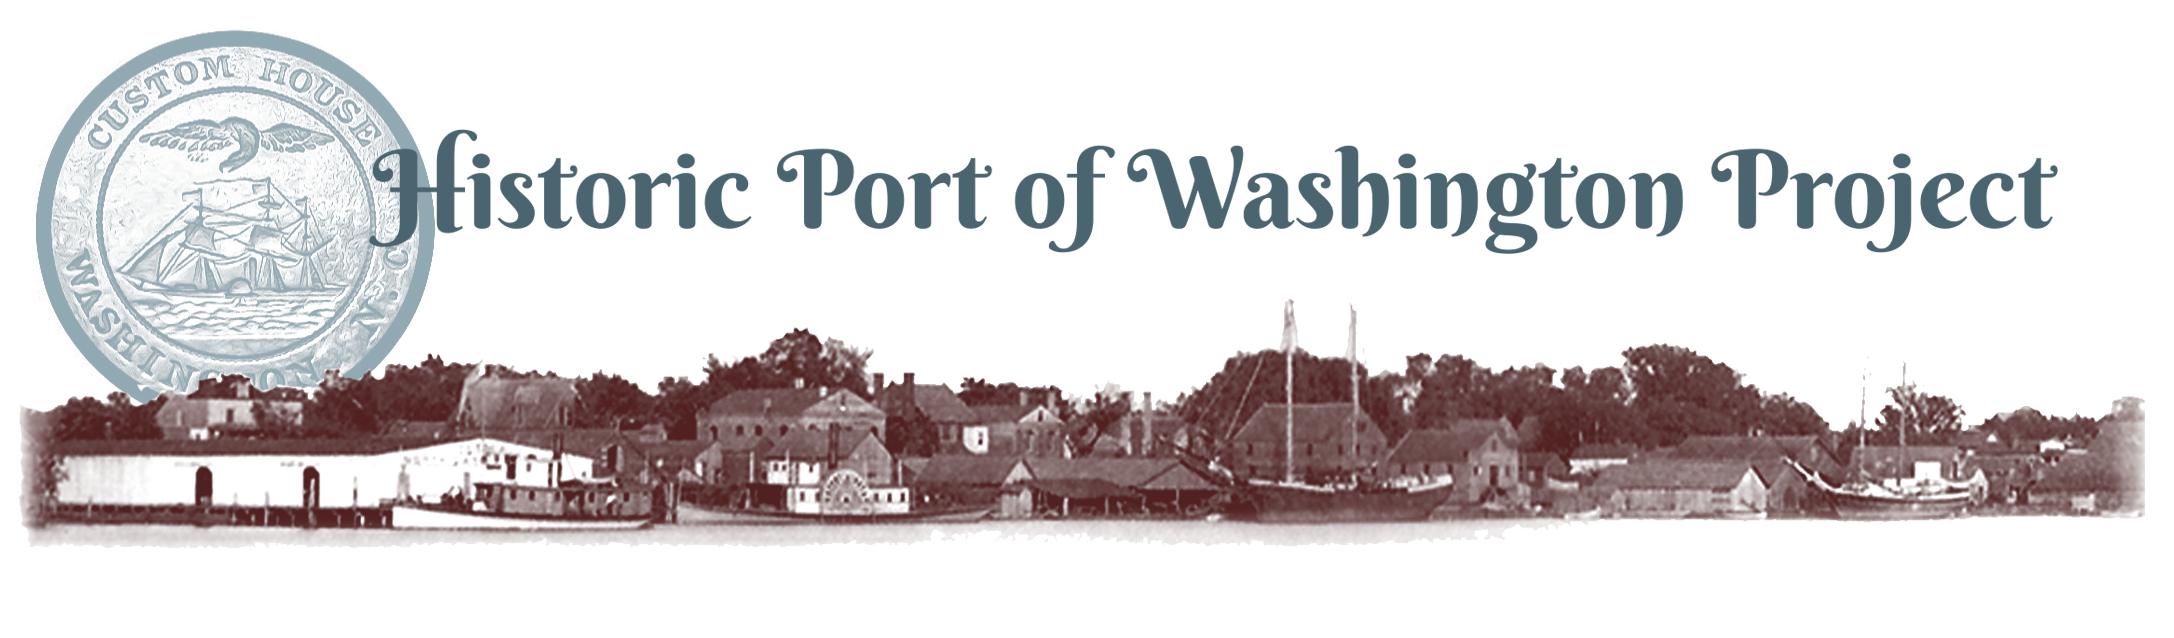 Historic Port of Washington Project